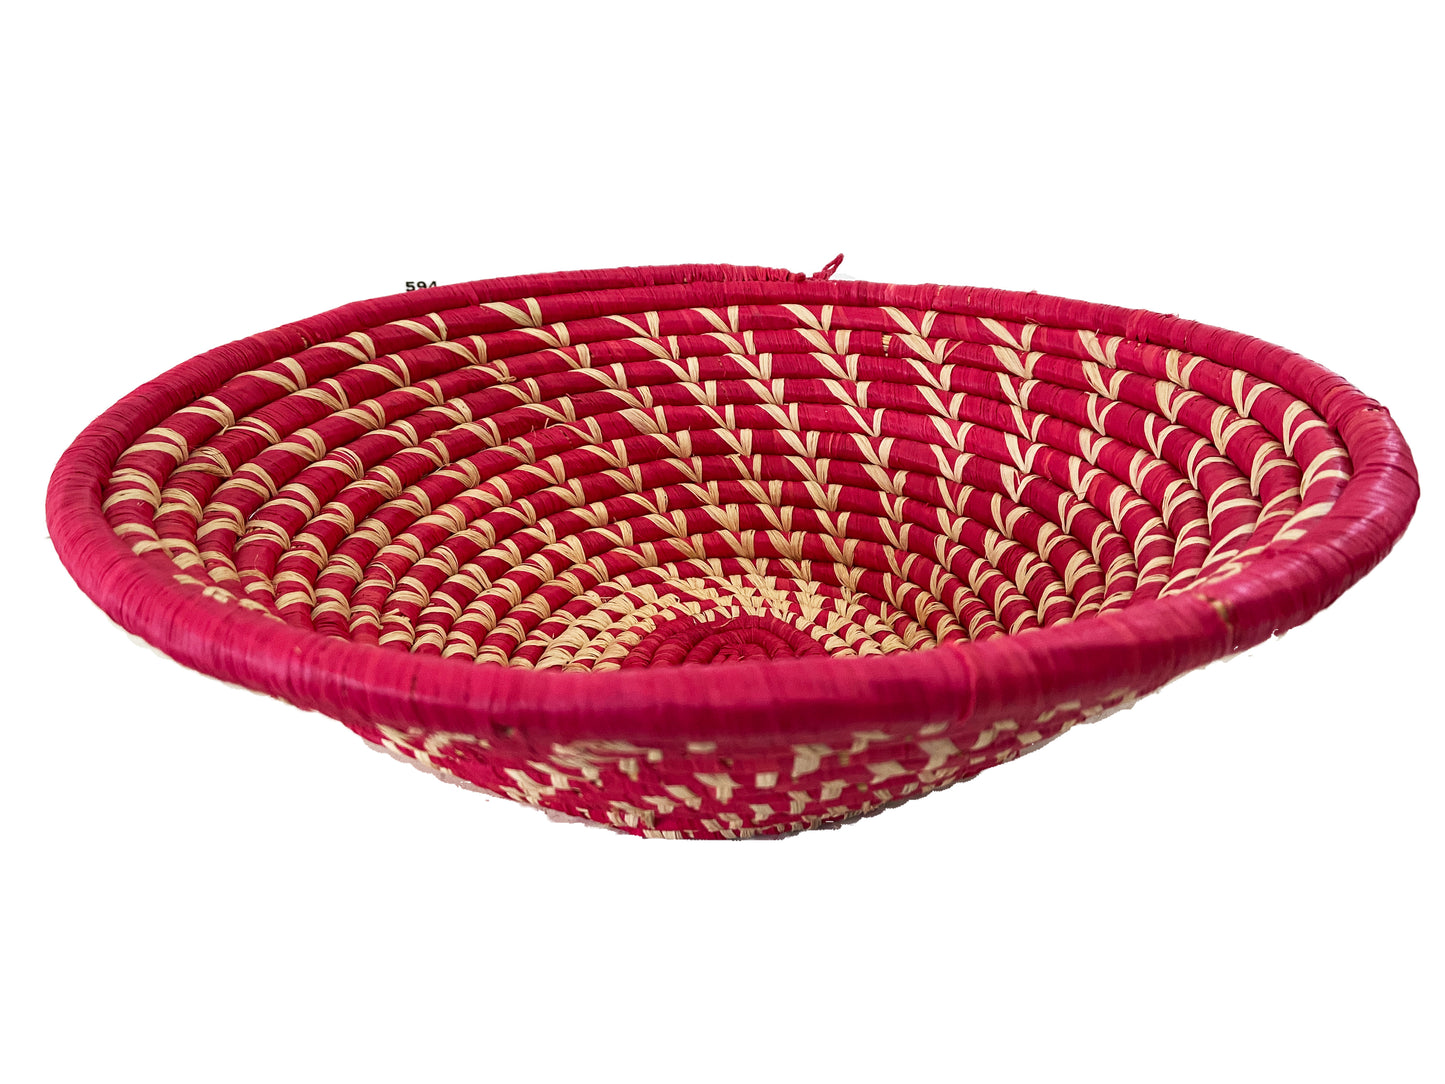 #1839 Handmade Woven East African Burundi Basket 12.5"d by 3.75" H